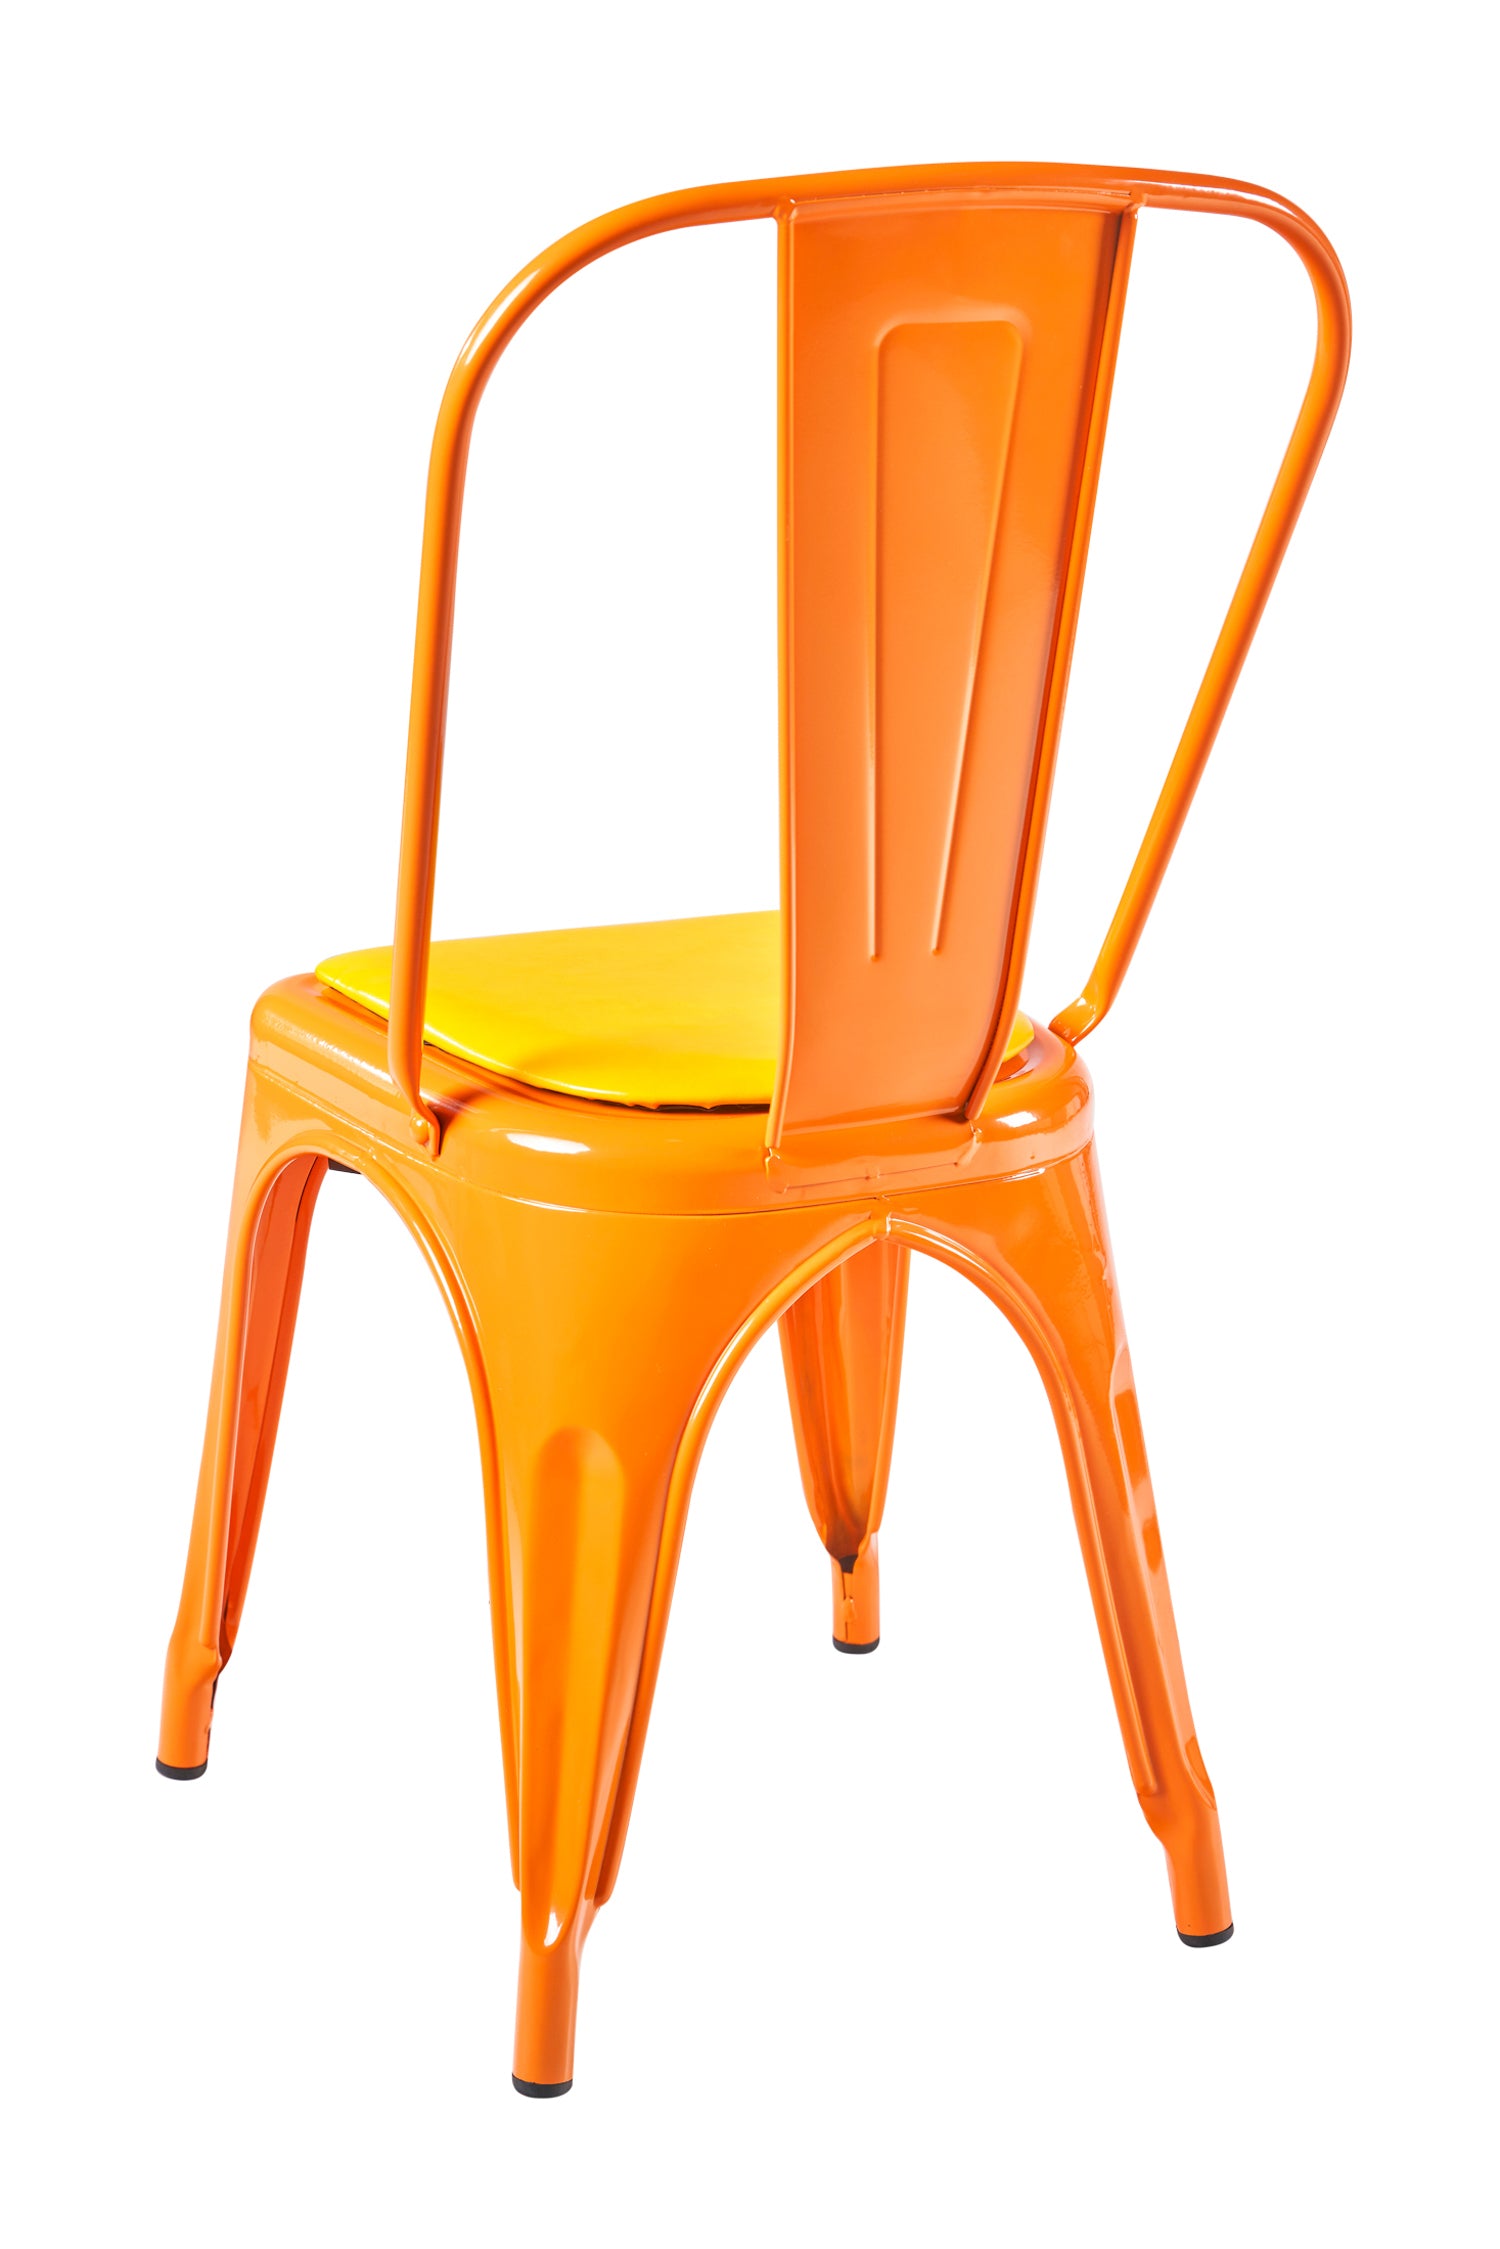 Novita home_AK-32/OY_Cindy - sedia arancio con seduta gialla_1